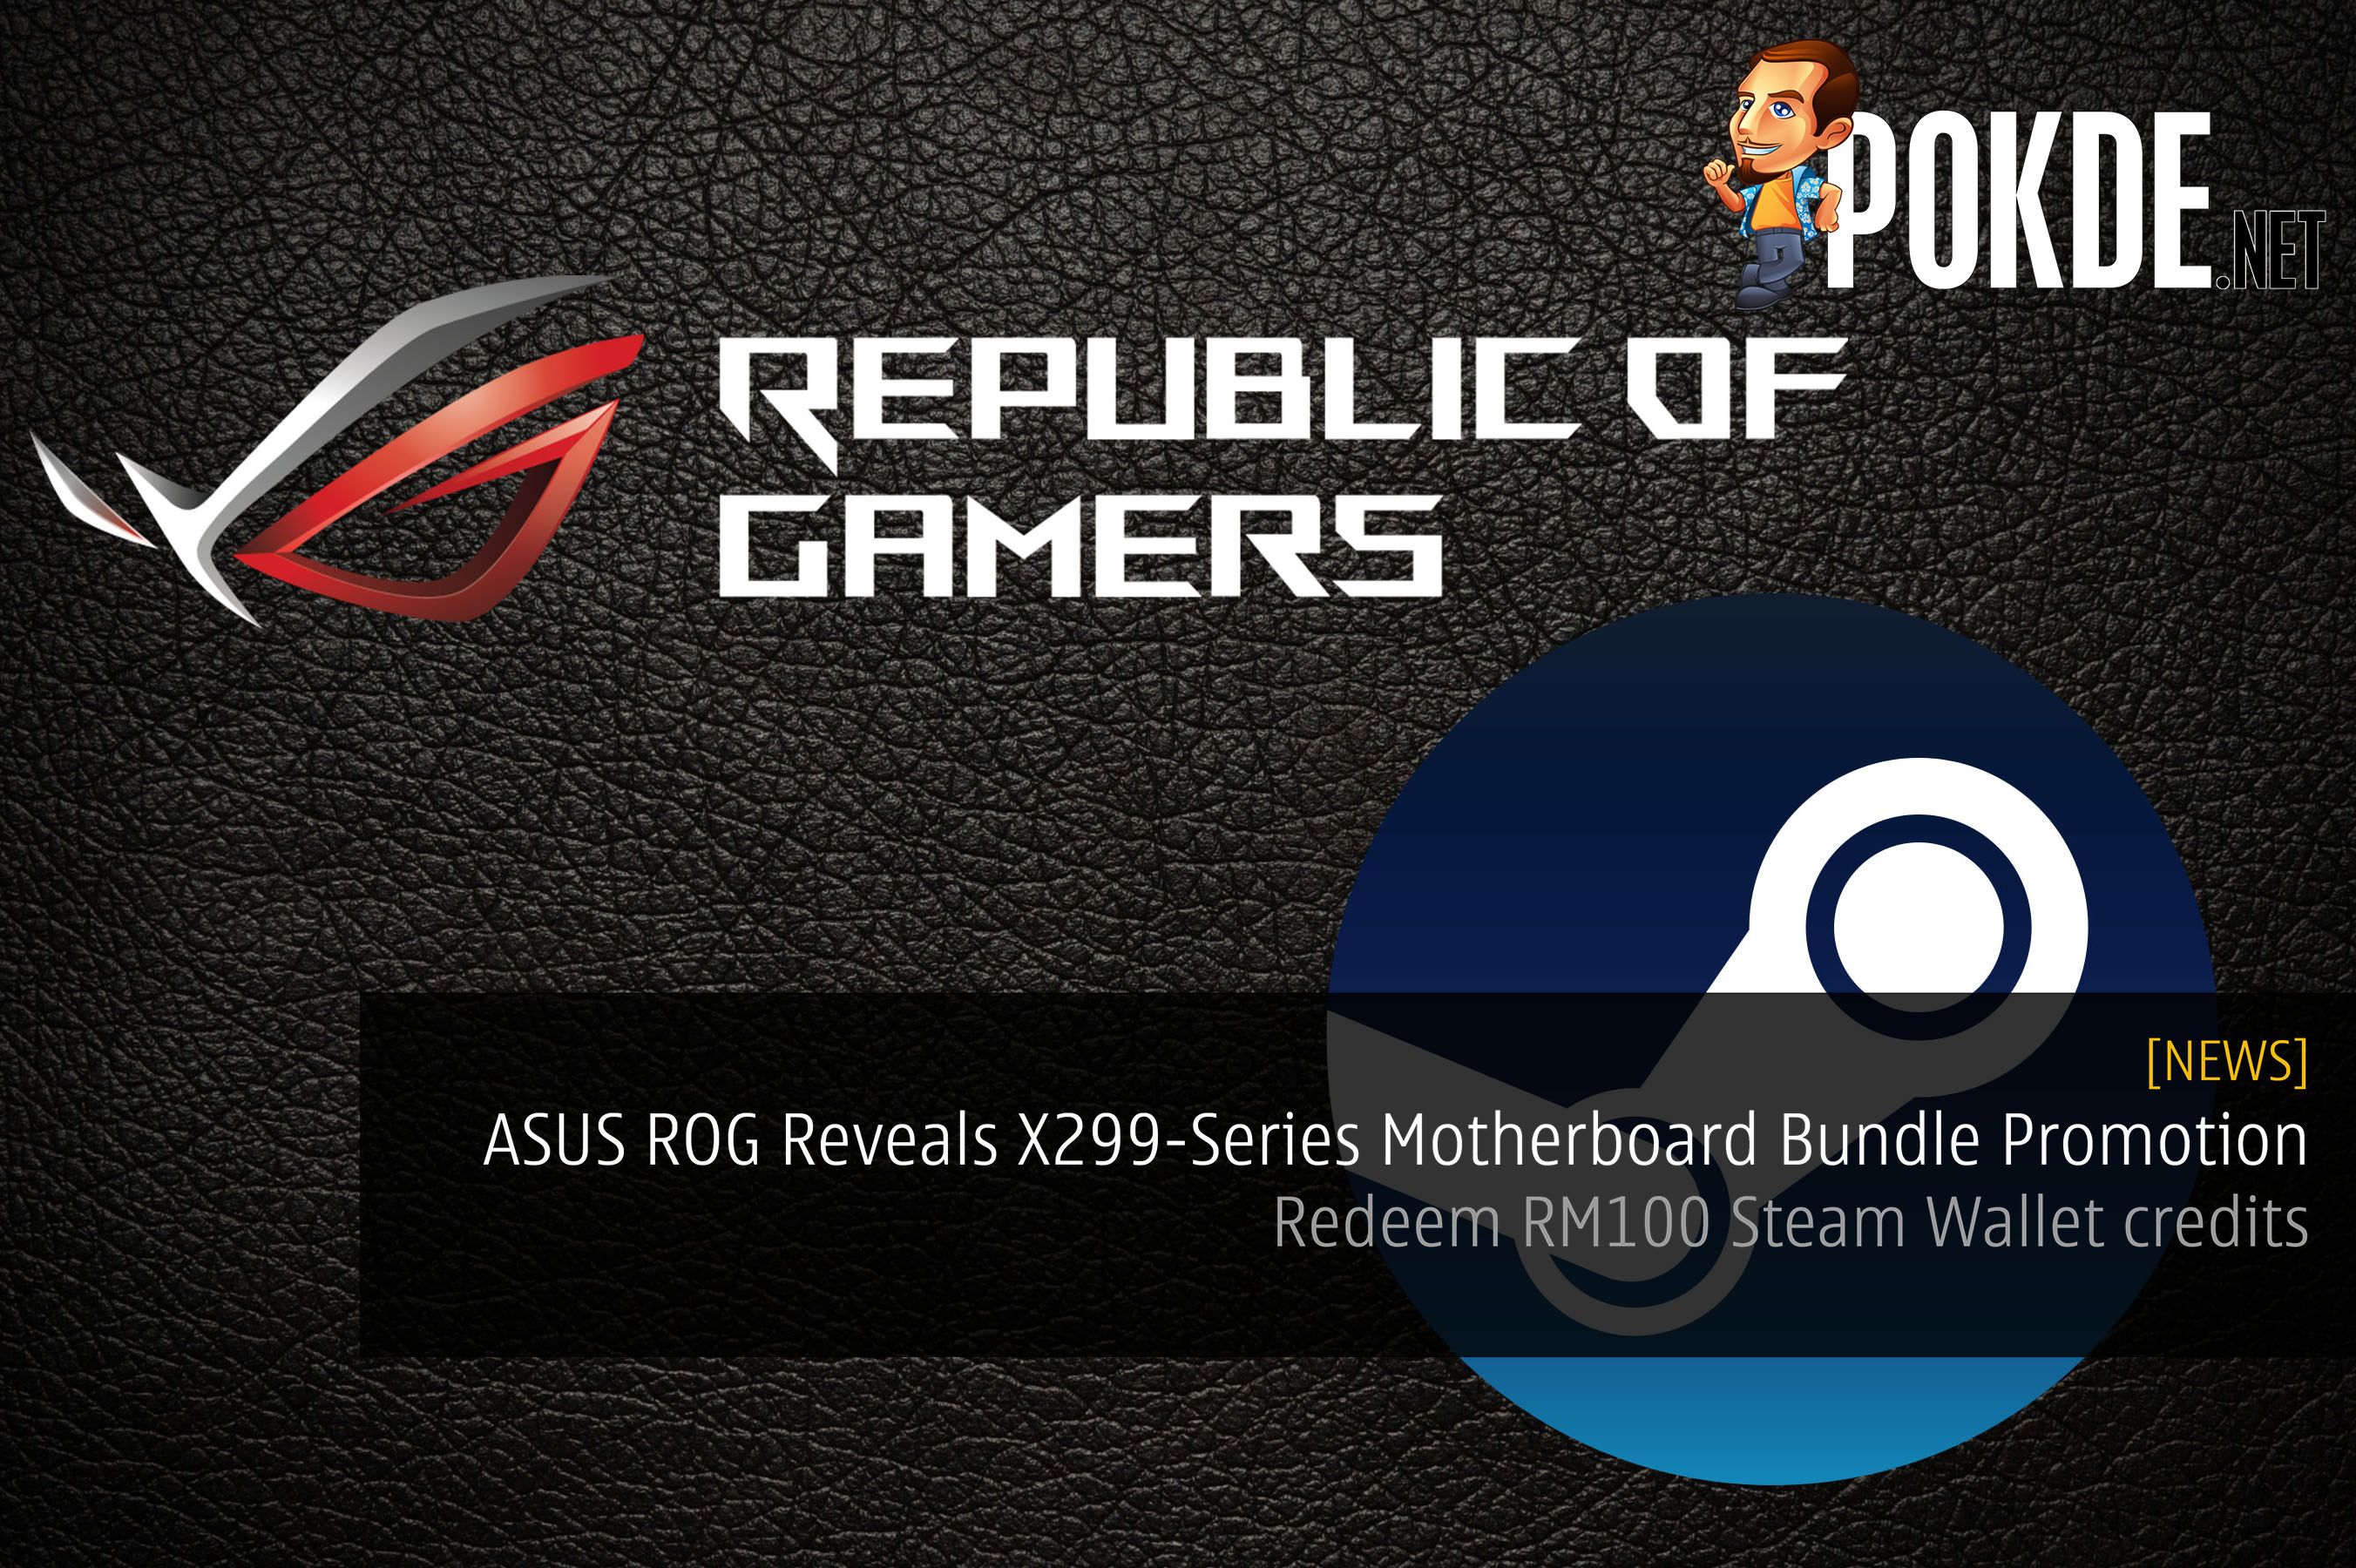 ASUS ROG Reveals X299 Motherboard Series Bundle Promotion - Redeem RM100 Steam Wallet credits 35